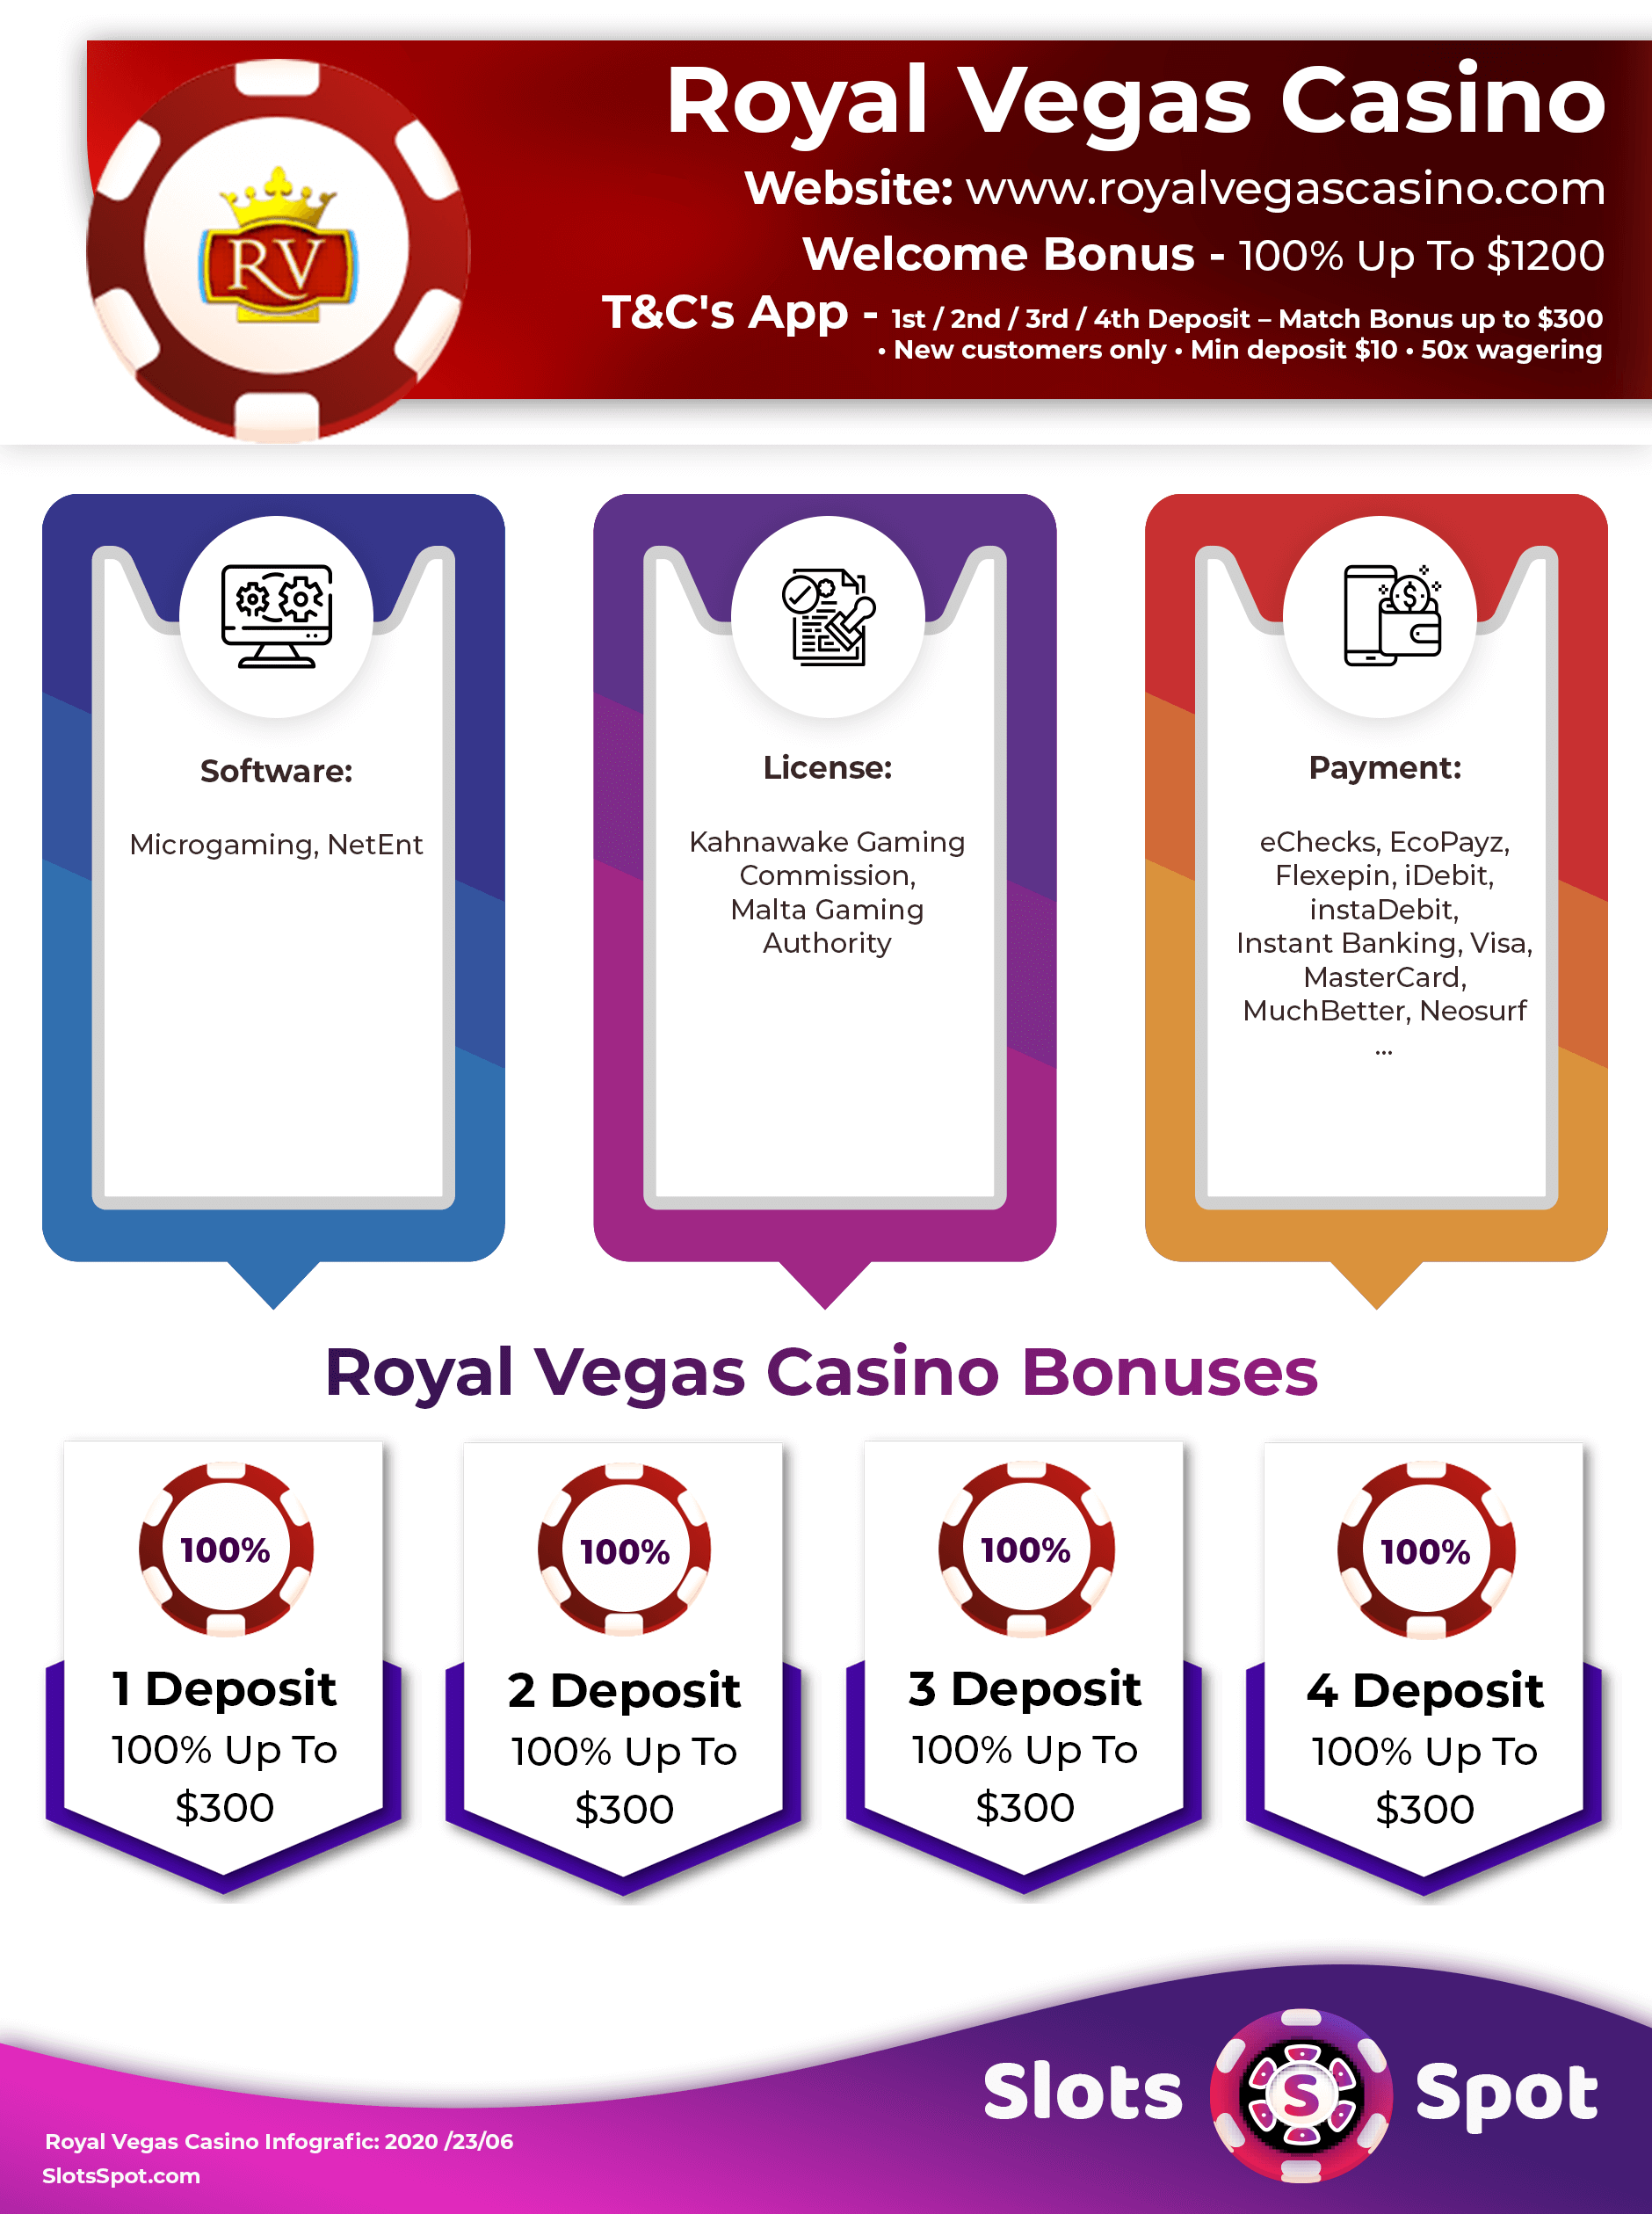 casino royal club no deposit bonus codes